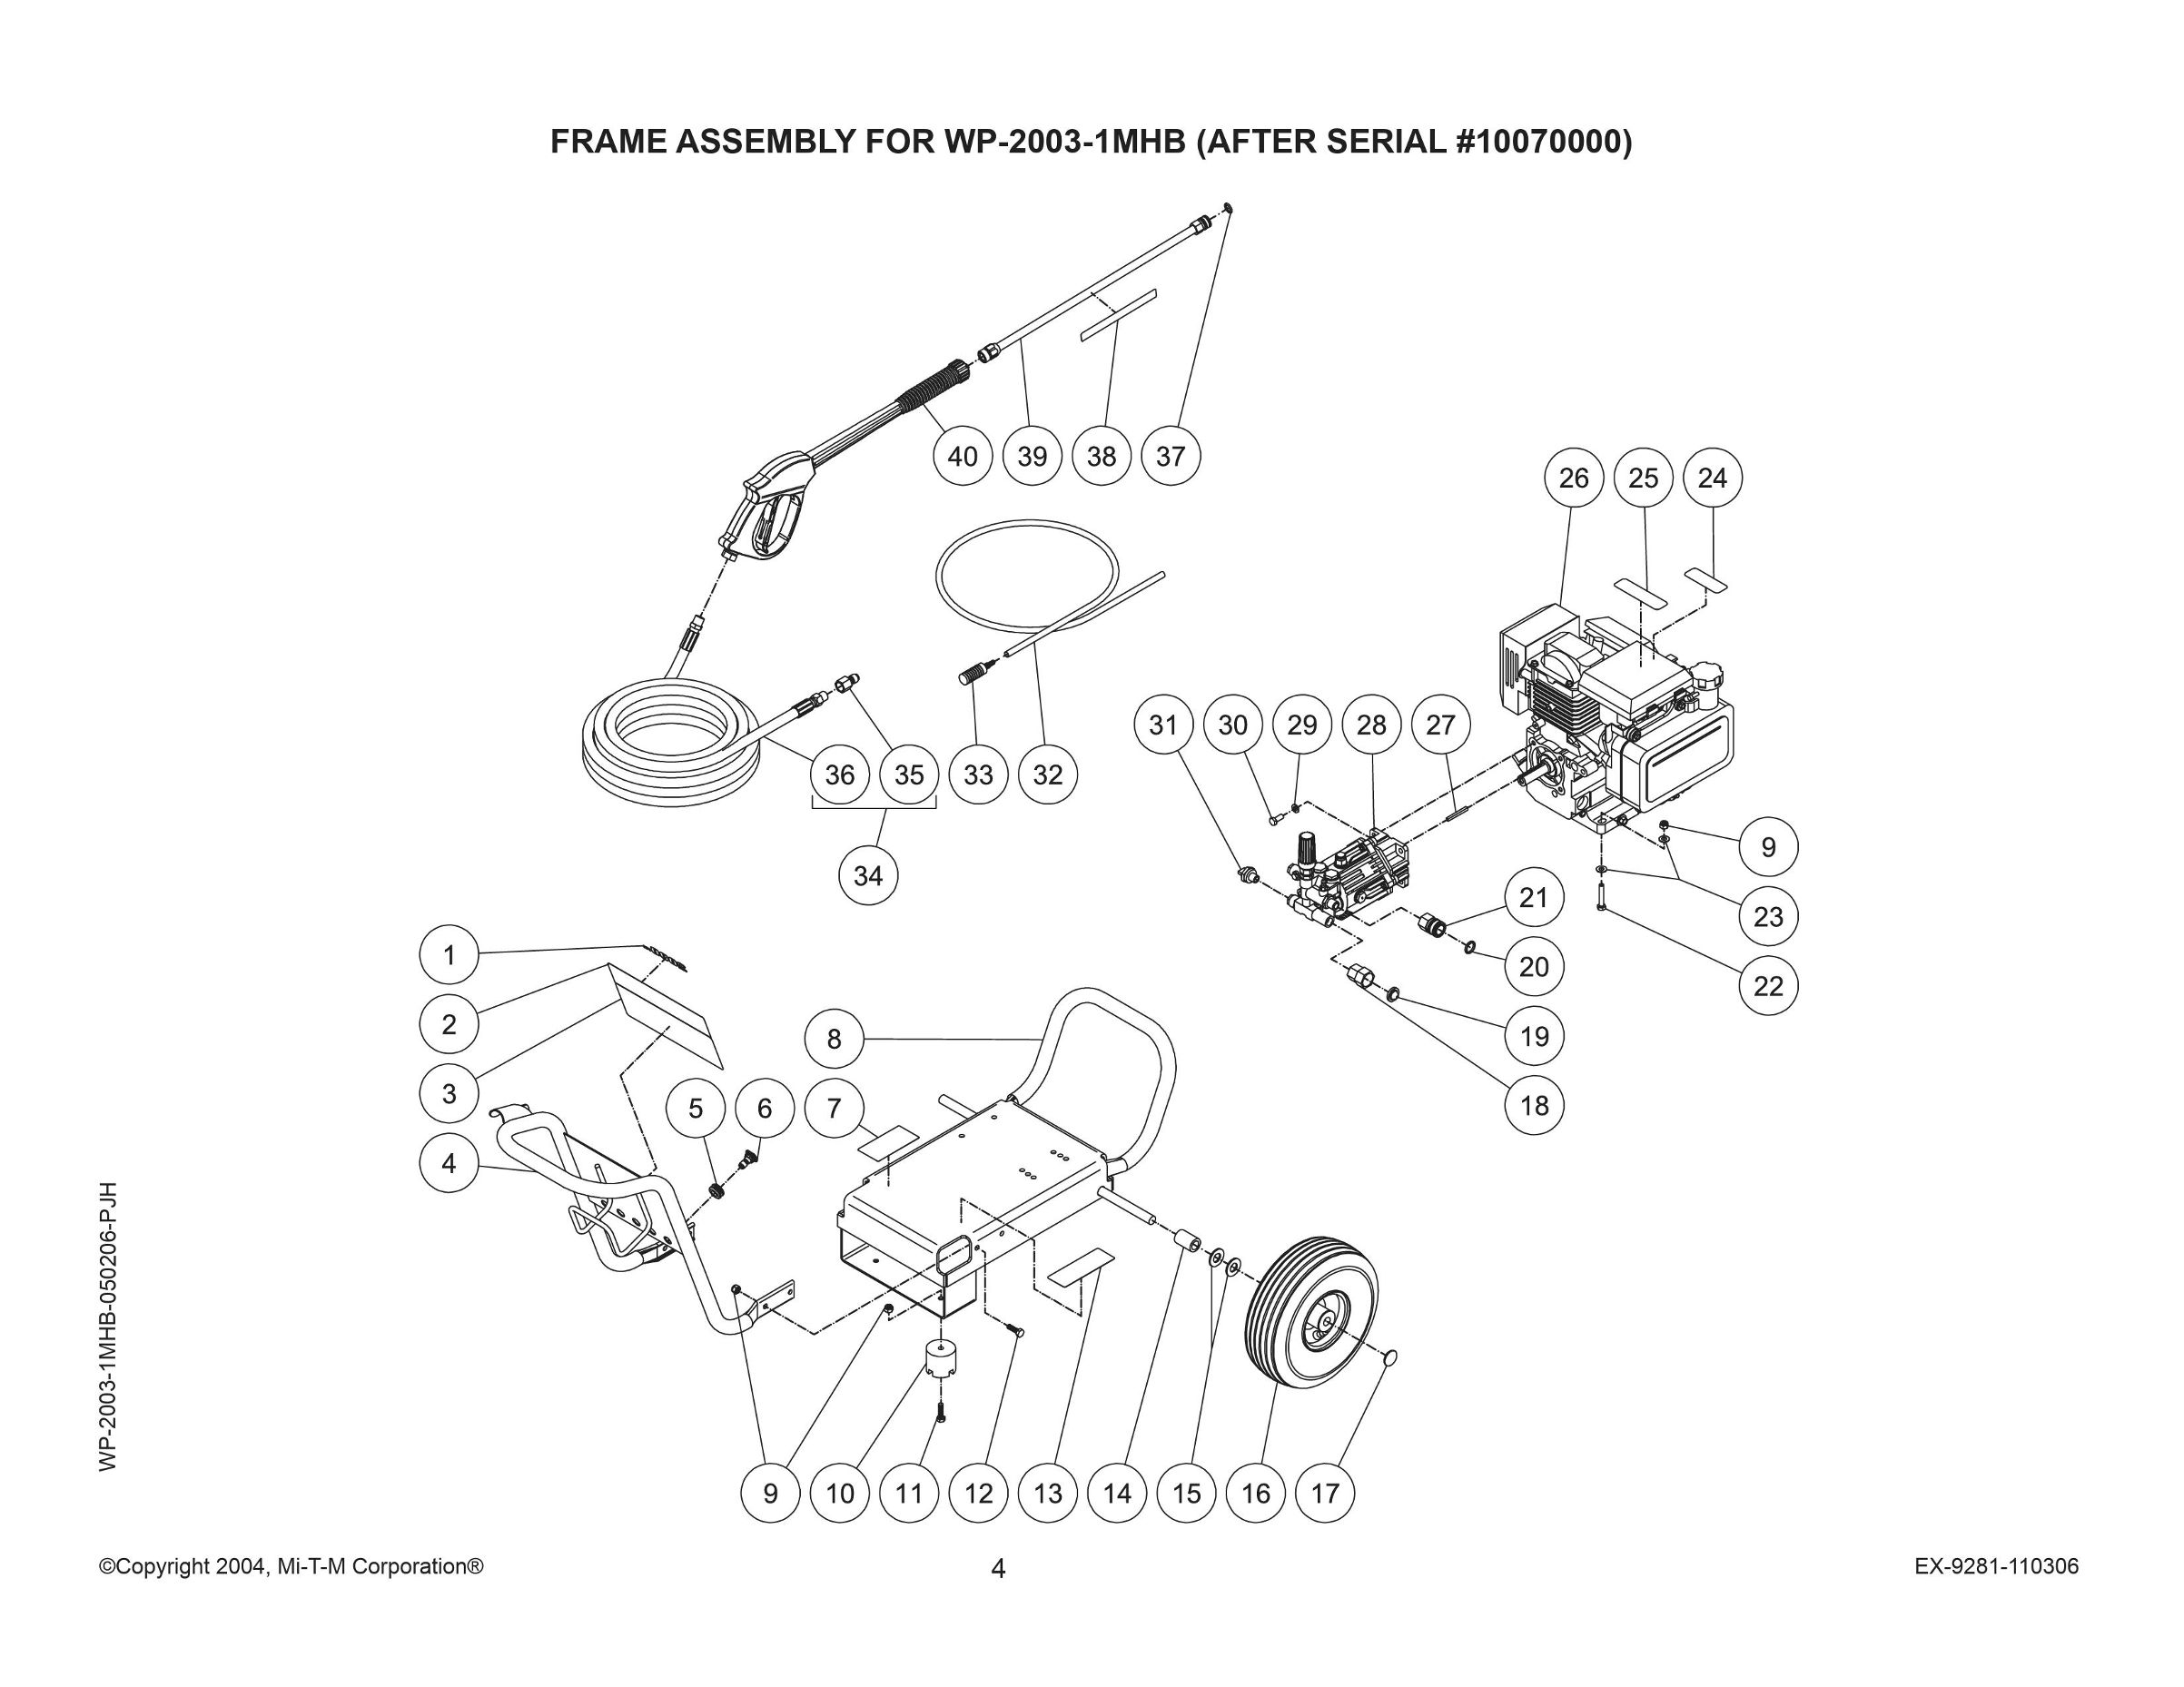 WP-2003-1MHB pressure washer parts, pumps, repair kits, breakdown & owners manual.